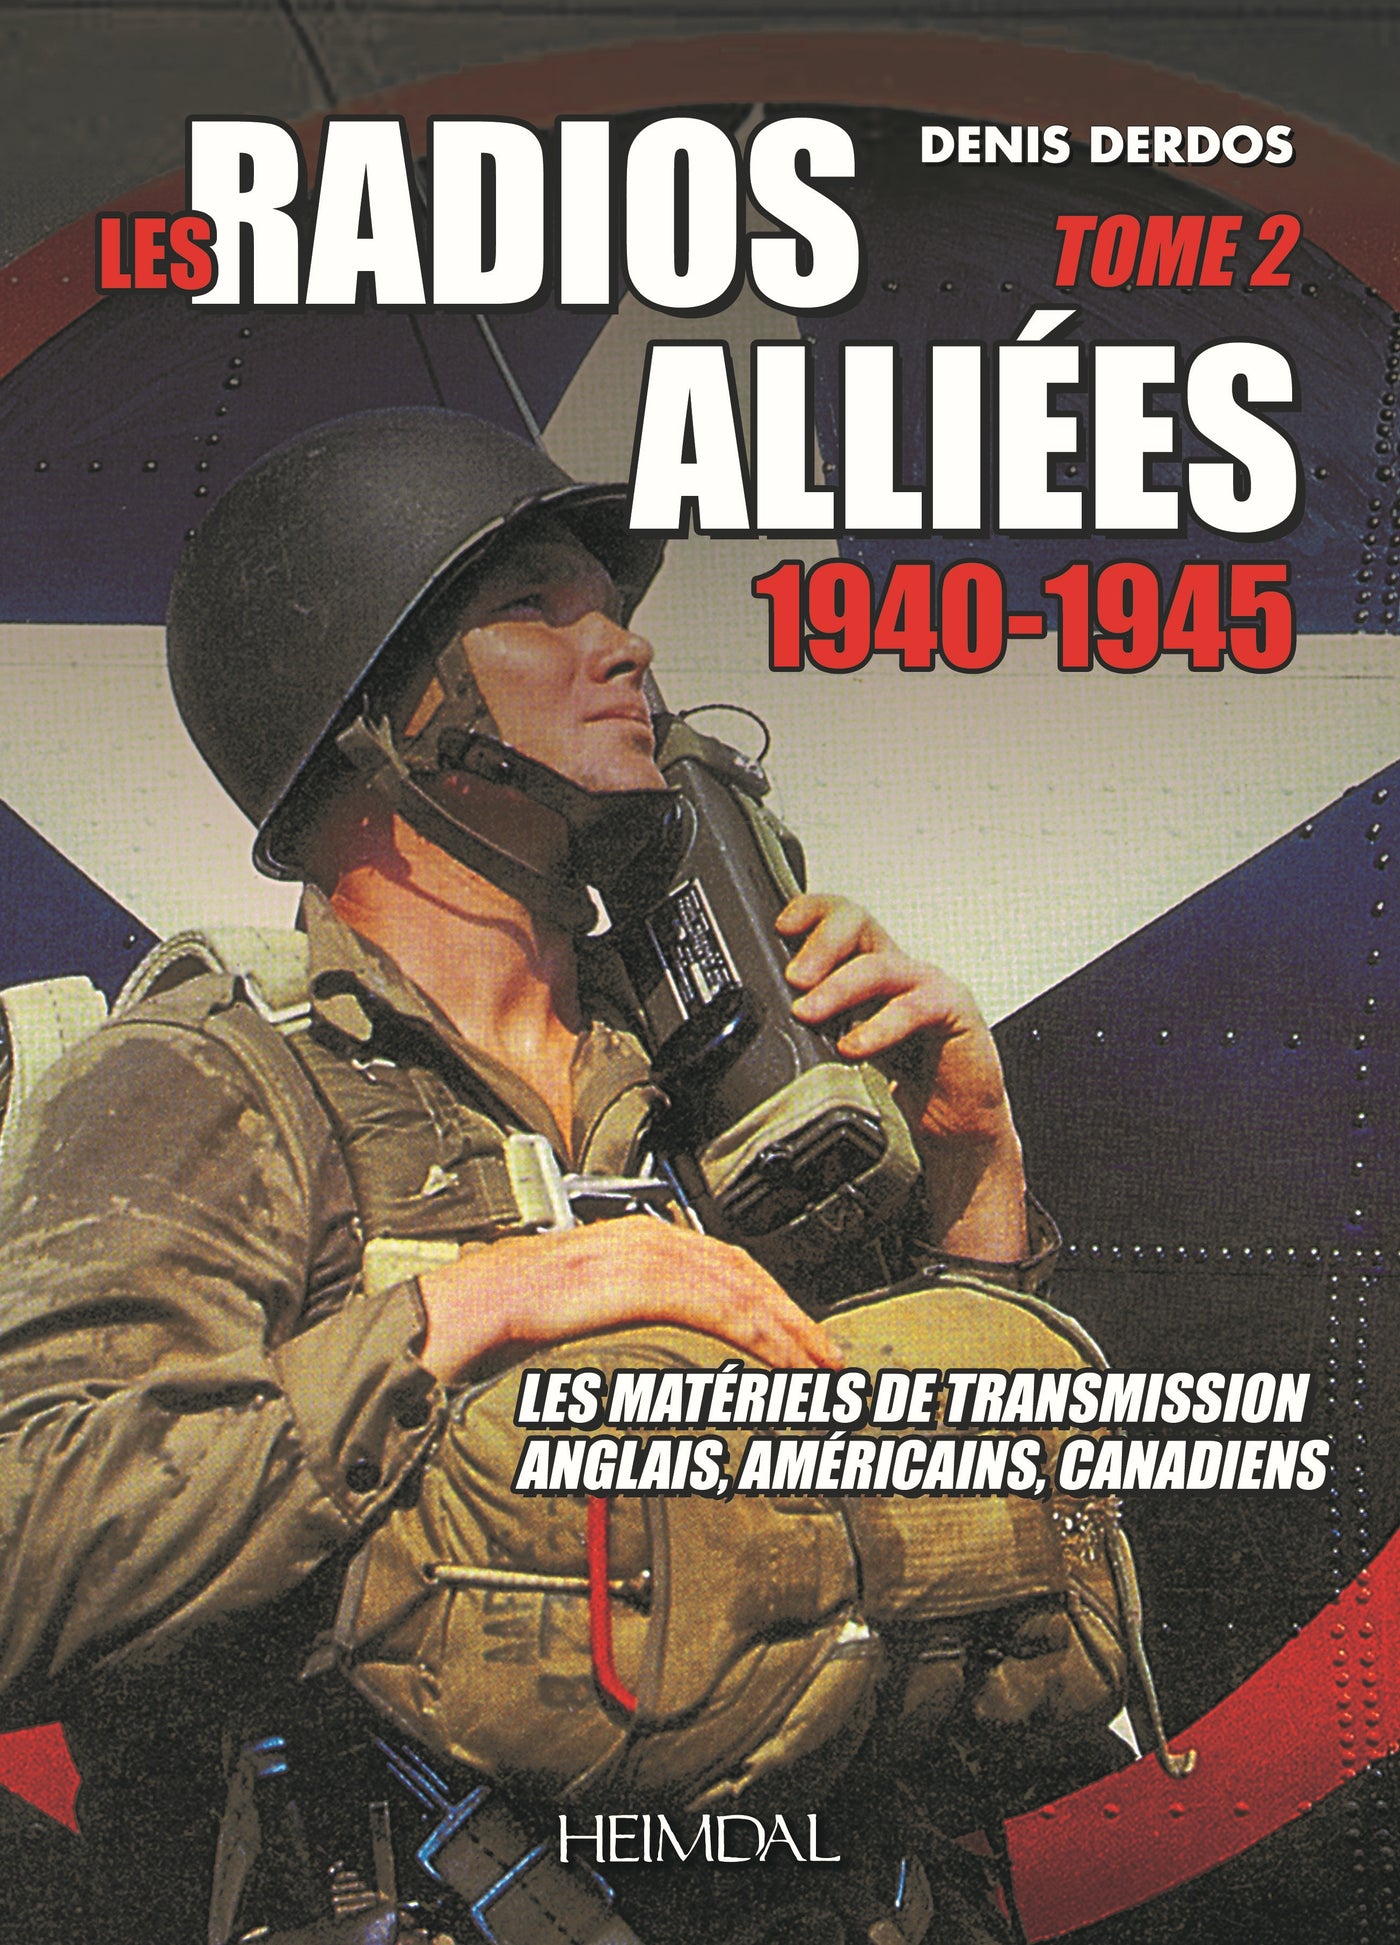 Les Radios Alliées: Les Matériels de Transmission Englisch, Amerika, Kanada 